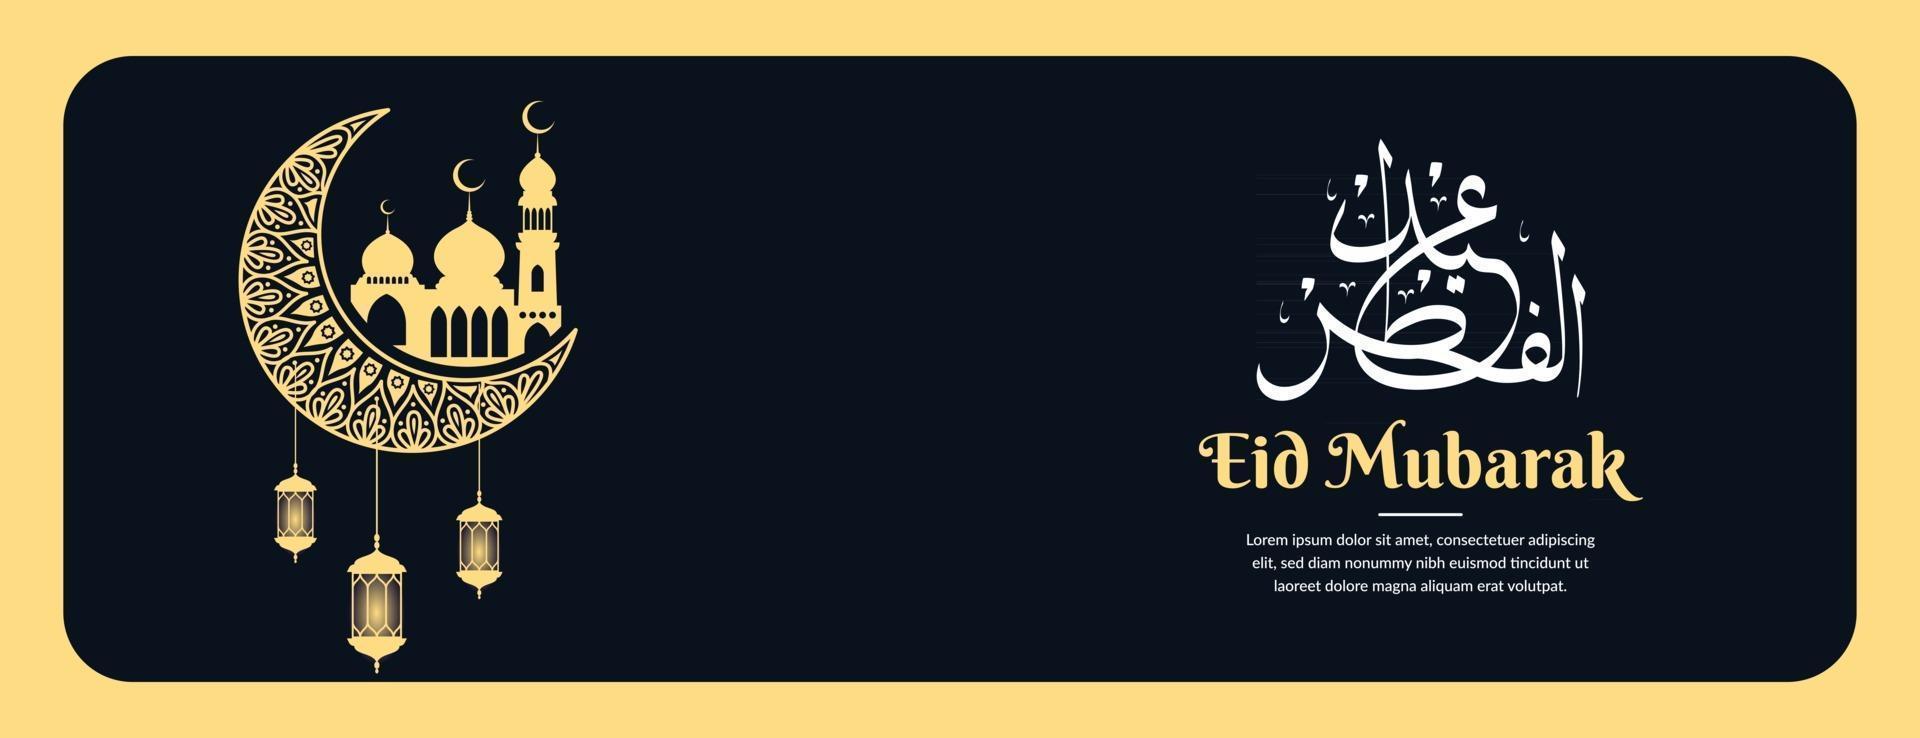 eid mubarak greeting banner template vector